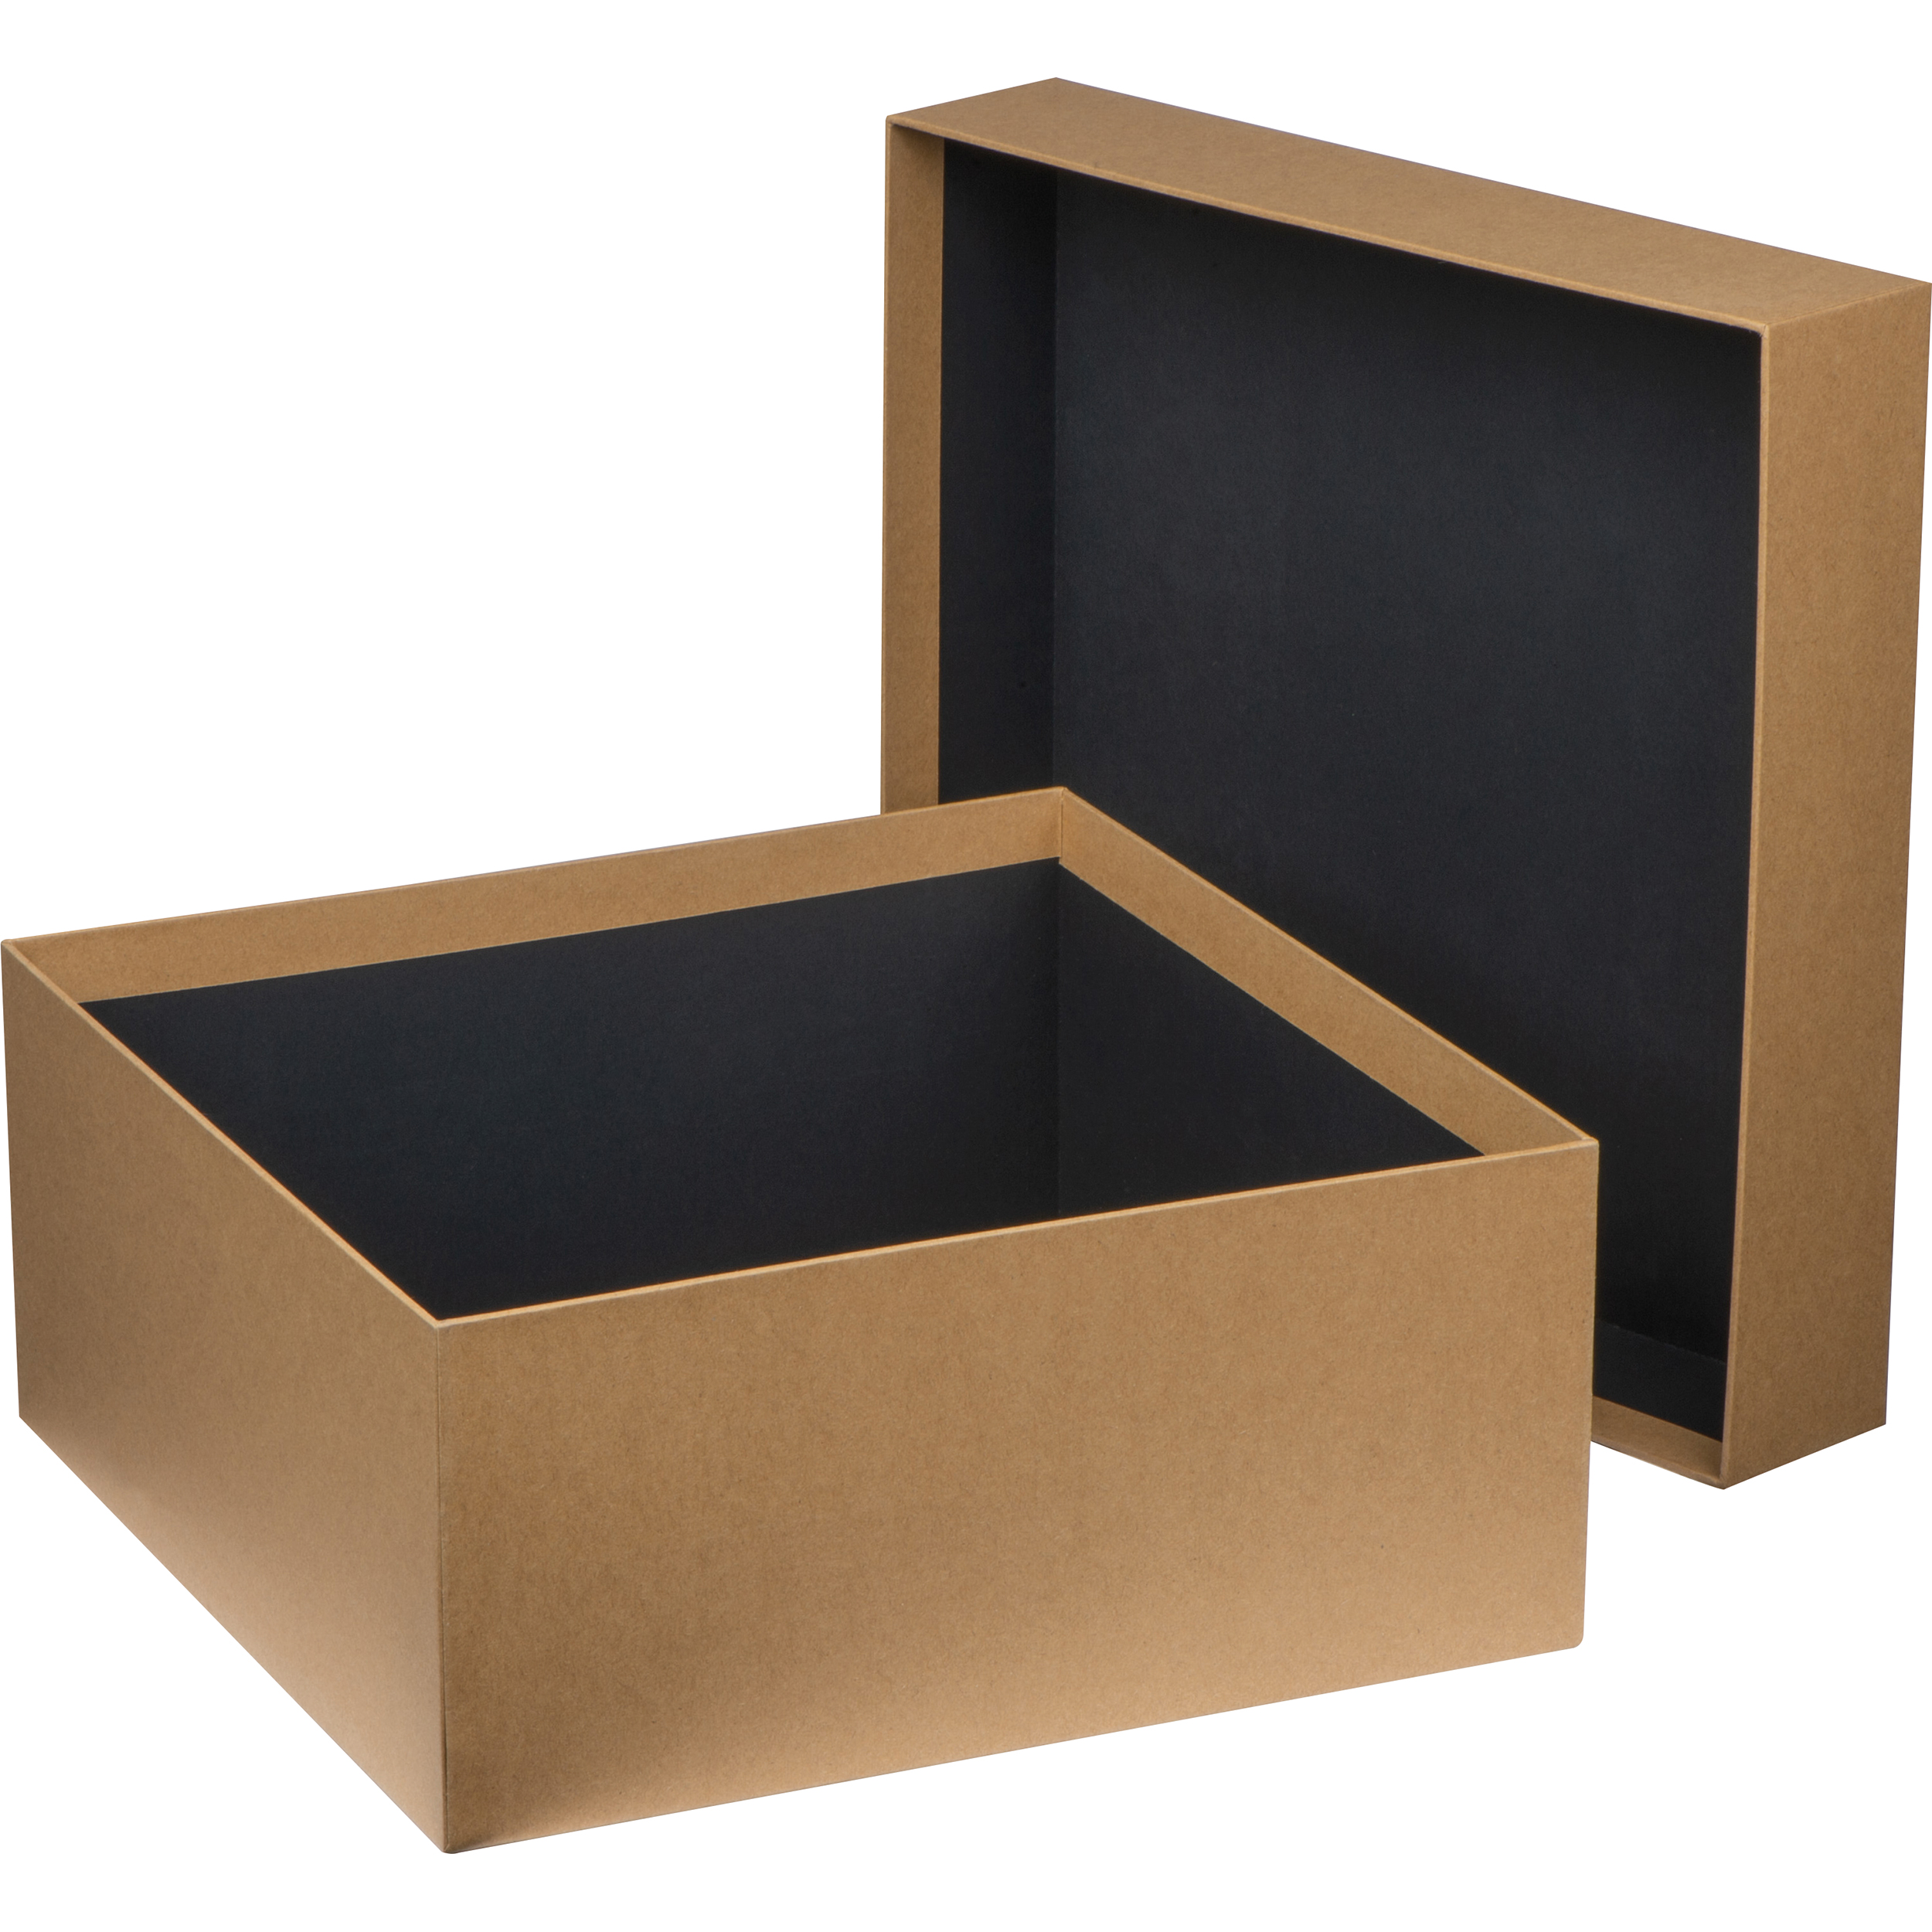 Large cardboard gift box